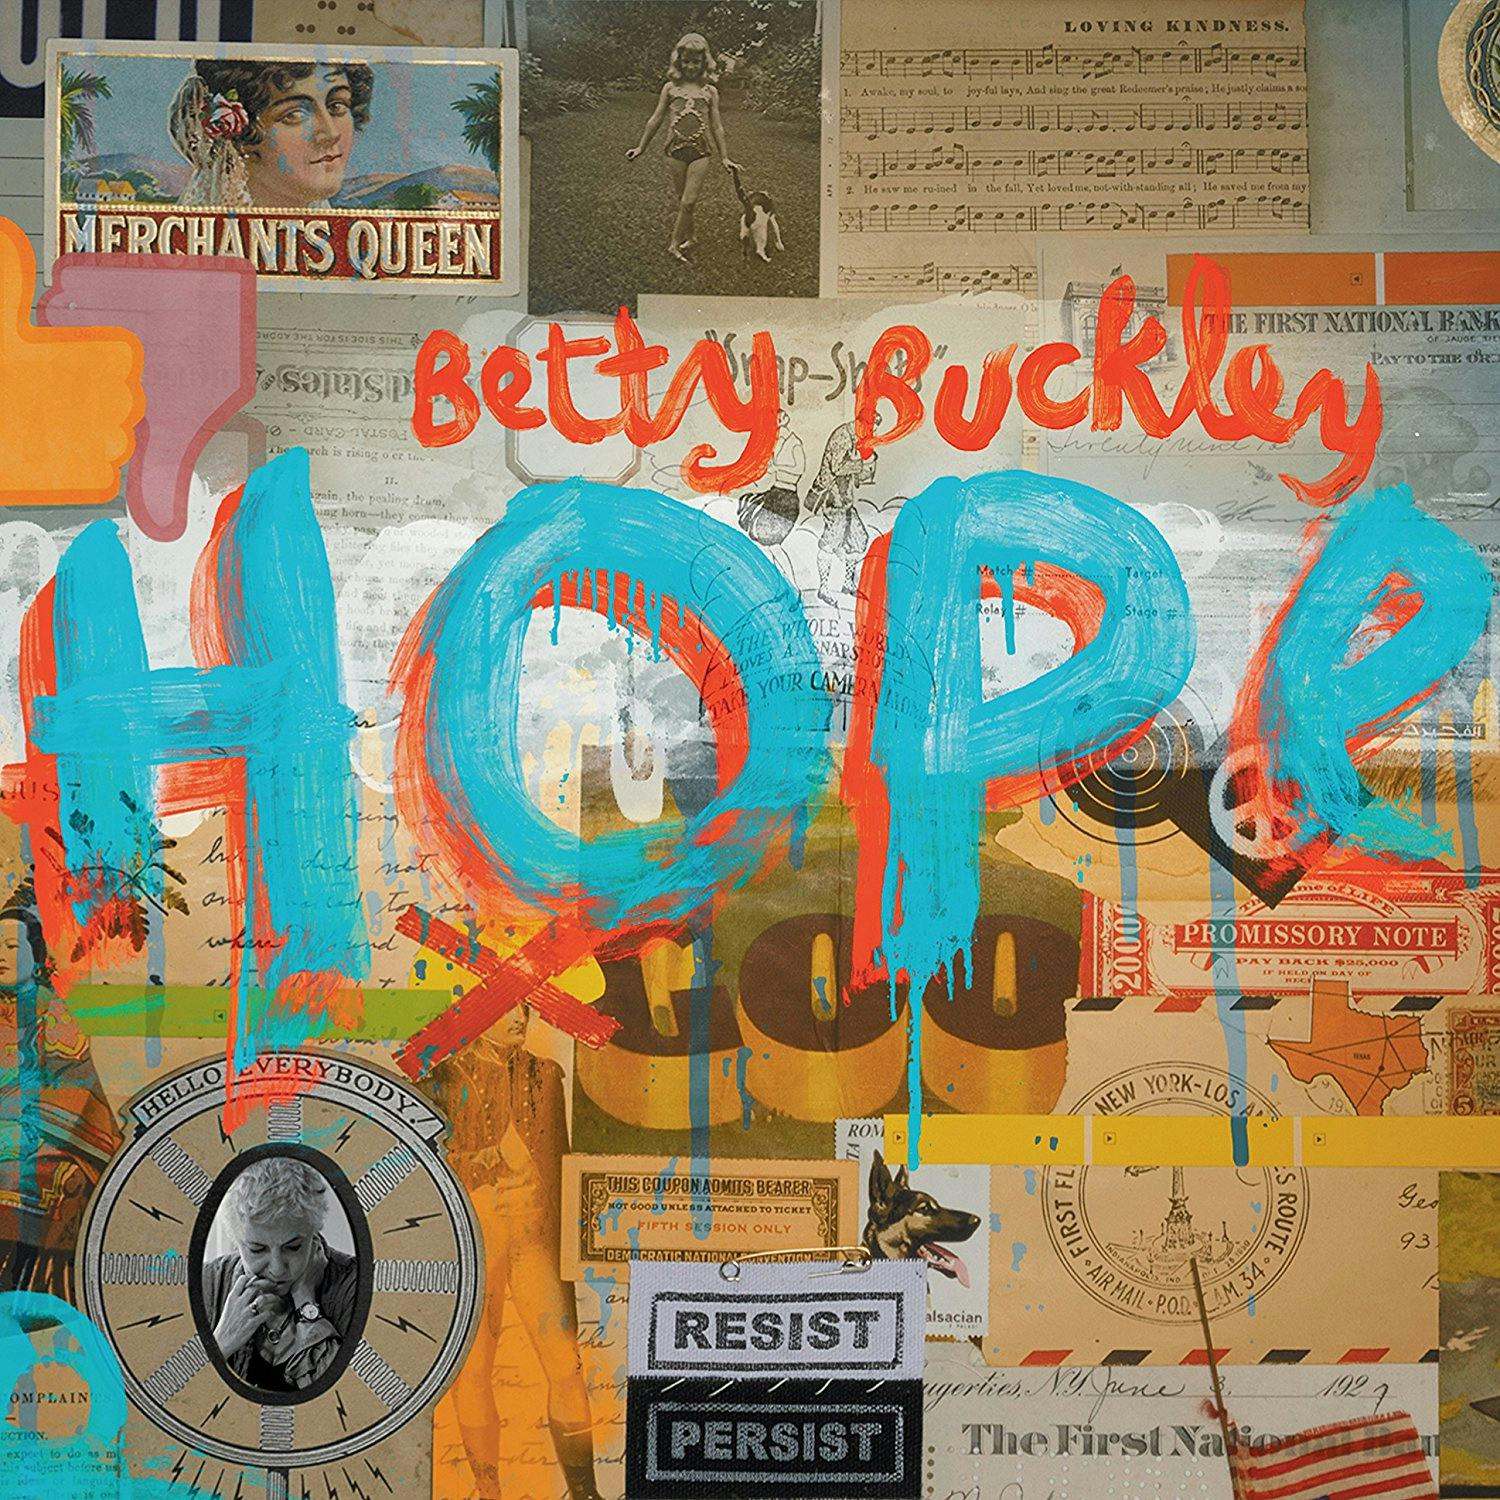 Hope Betty Buckley  Live Album